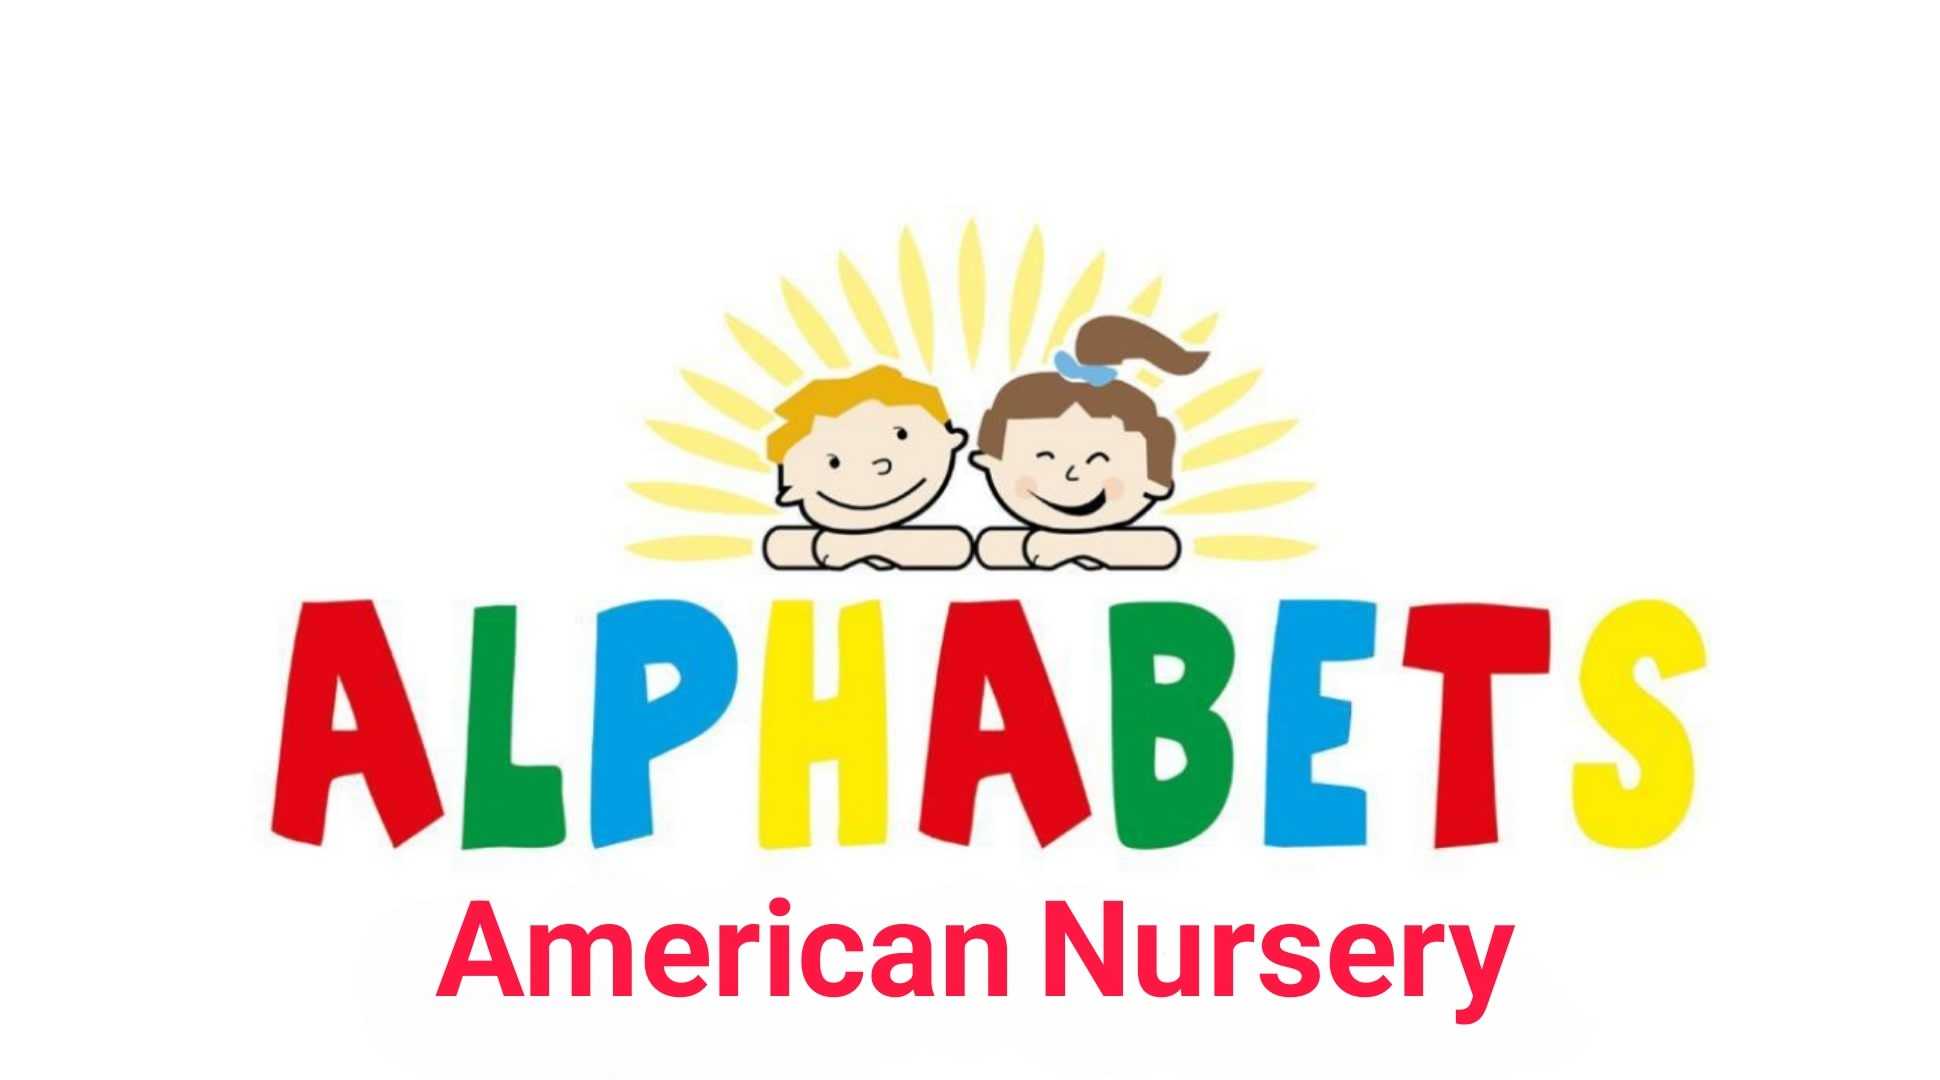 Alphabets American Nursery